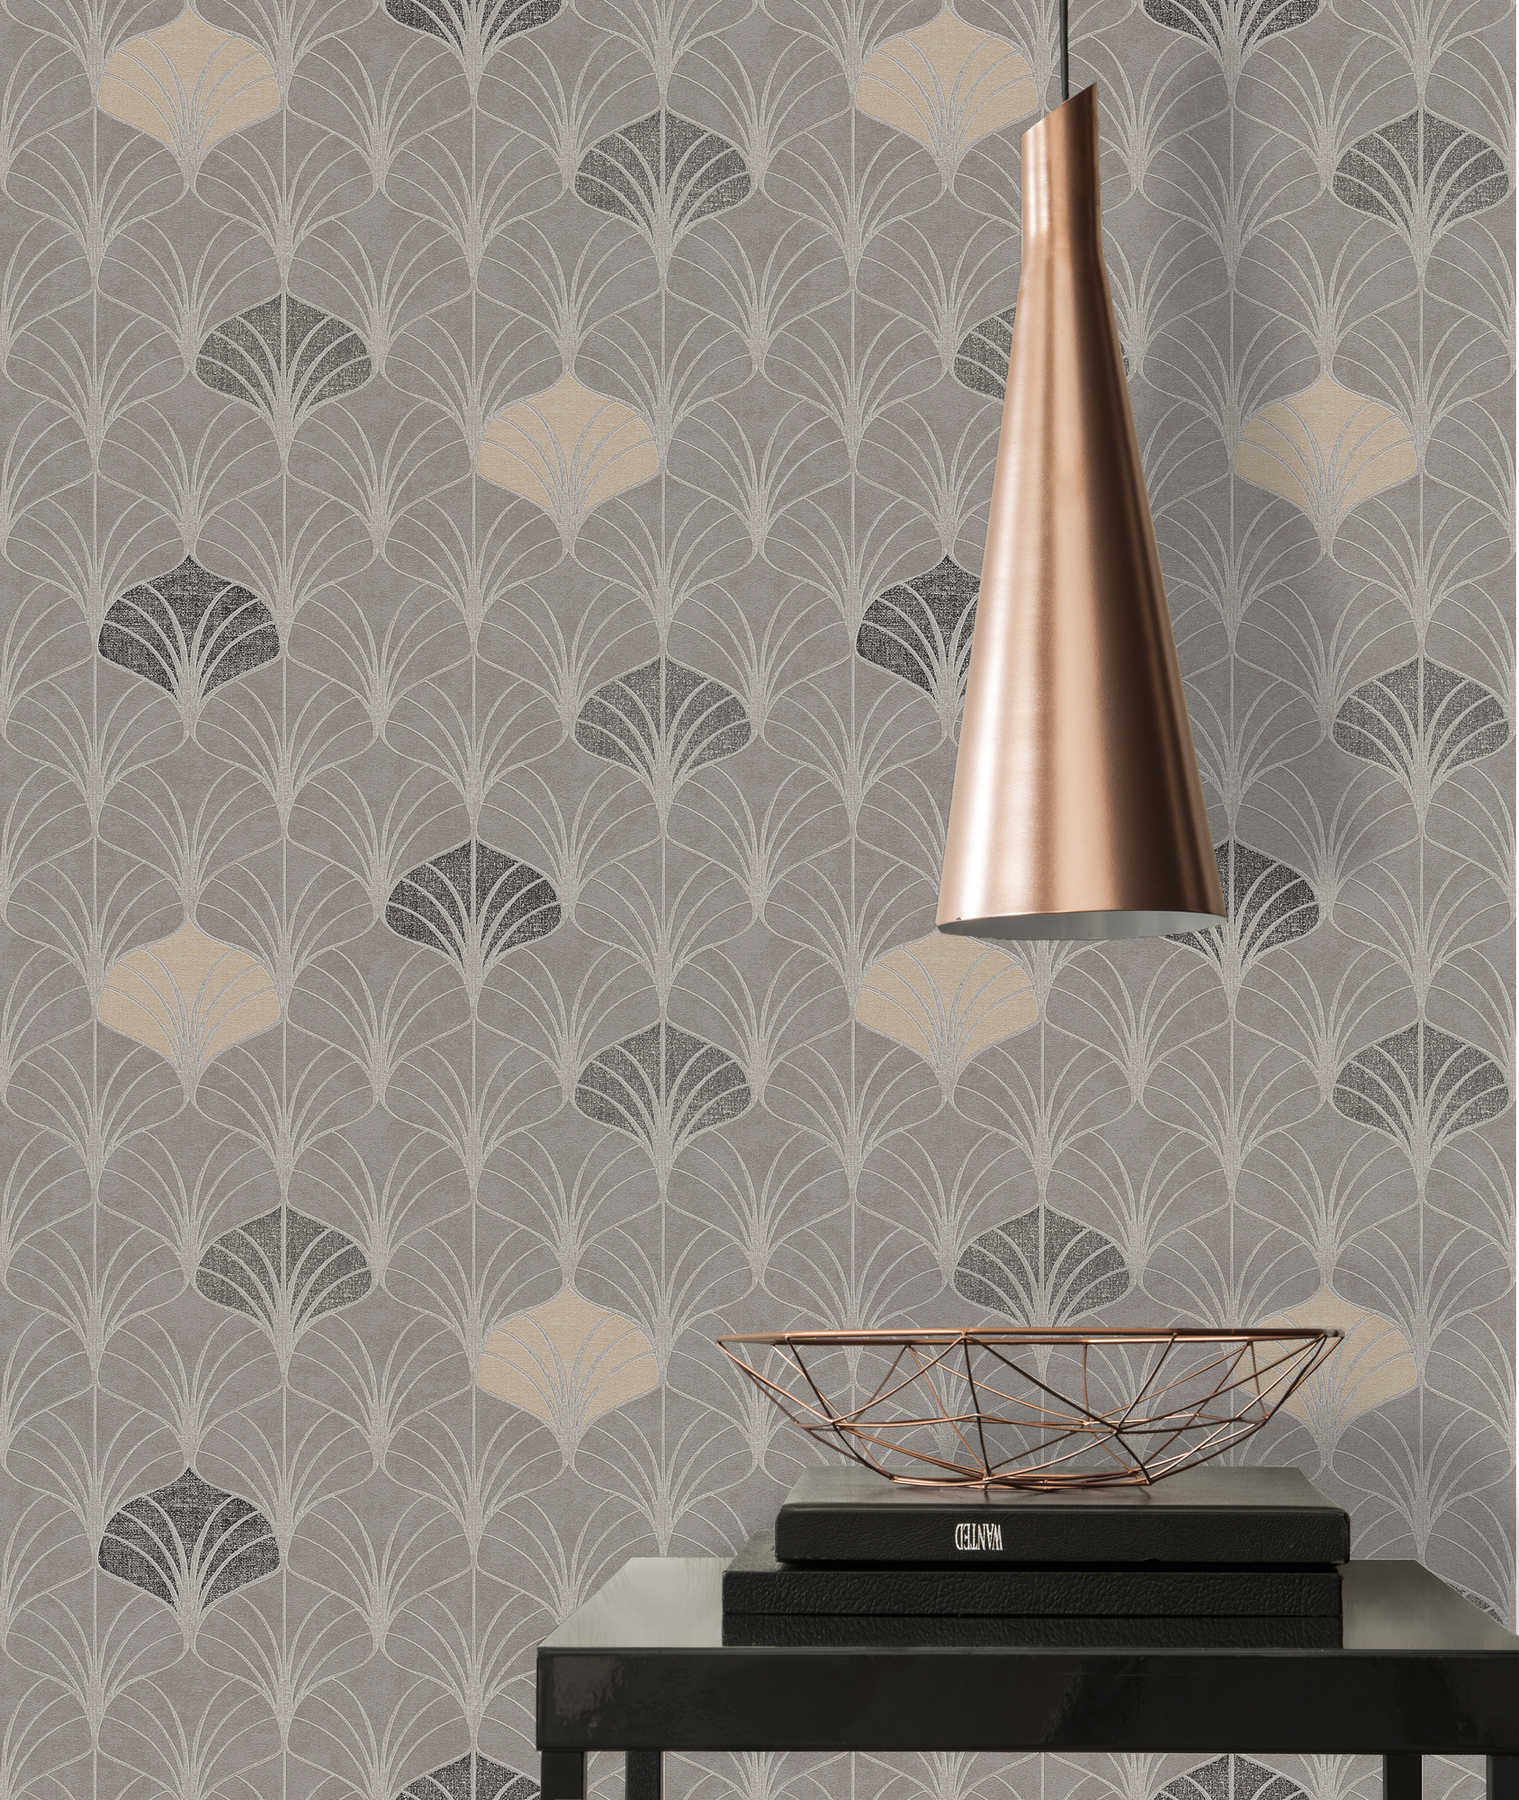             Pattern wallpaper art deco style with metallic effect - grey, beige, brown
        